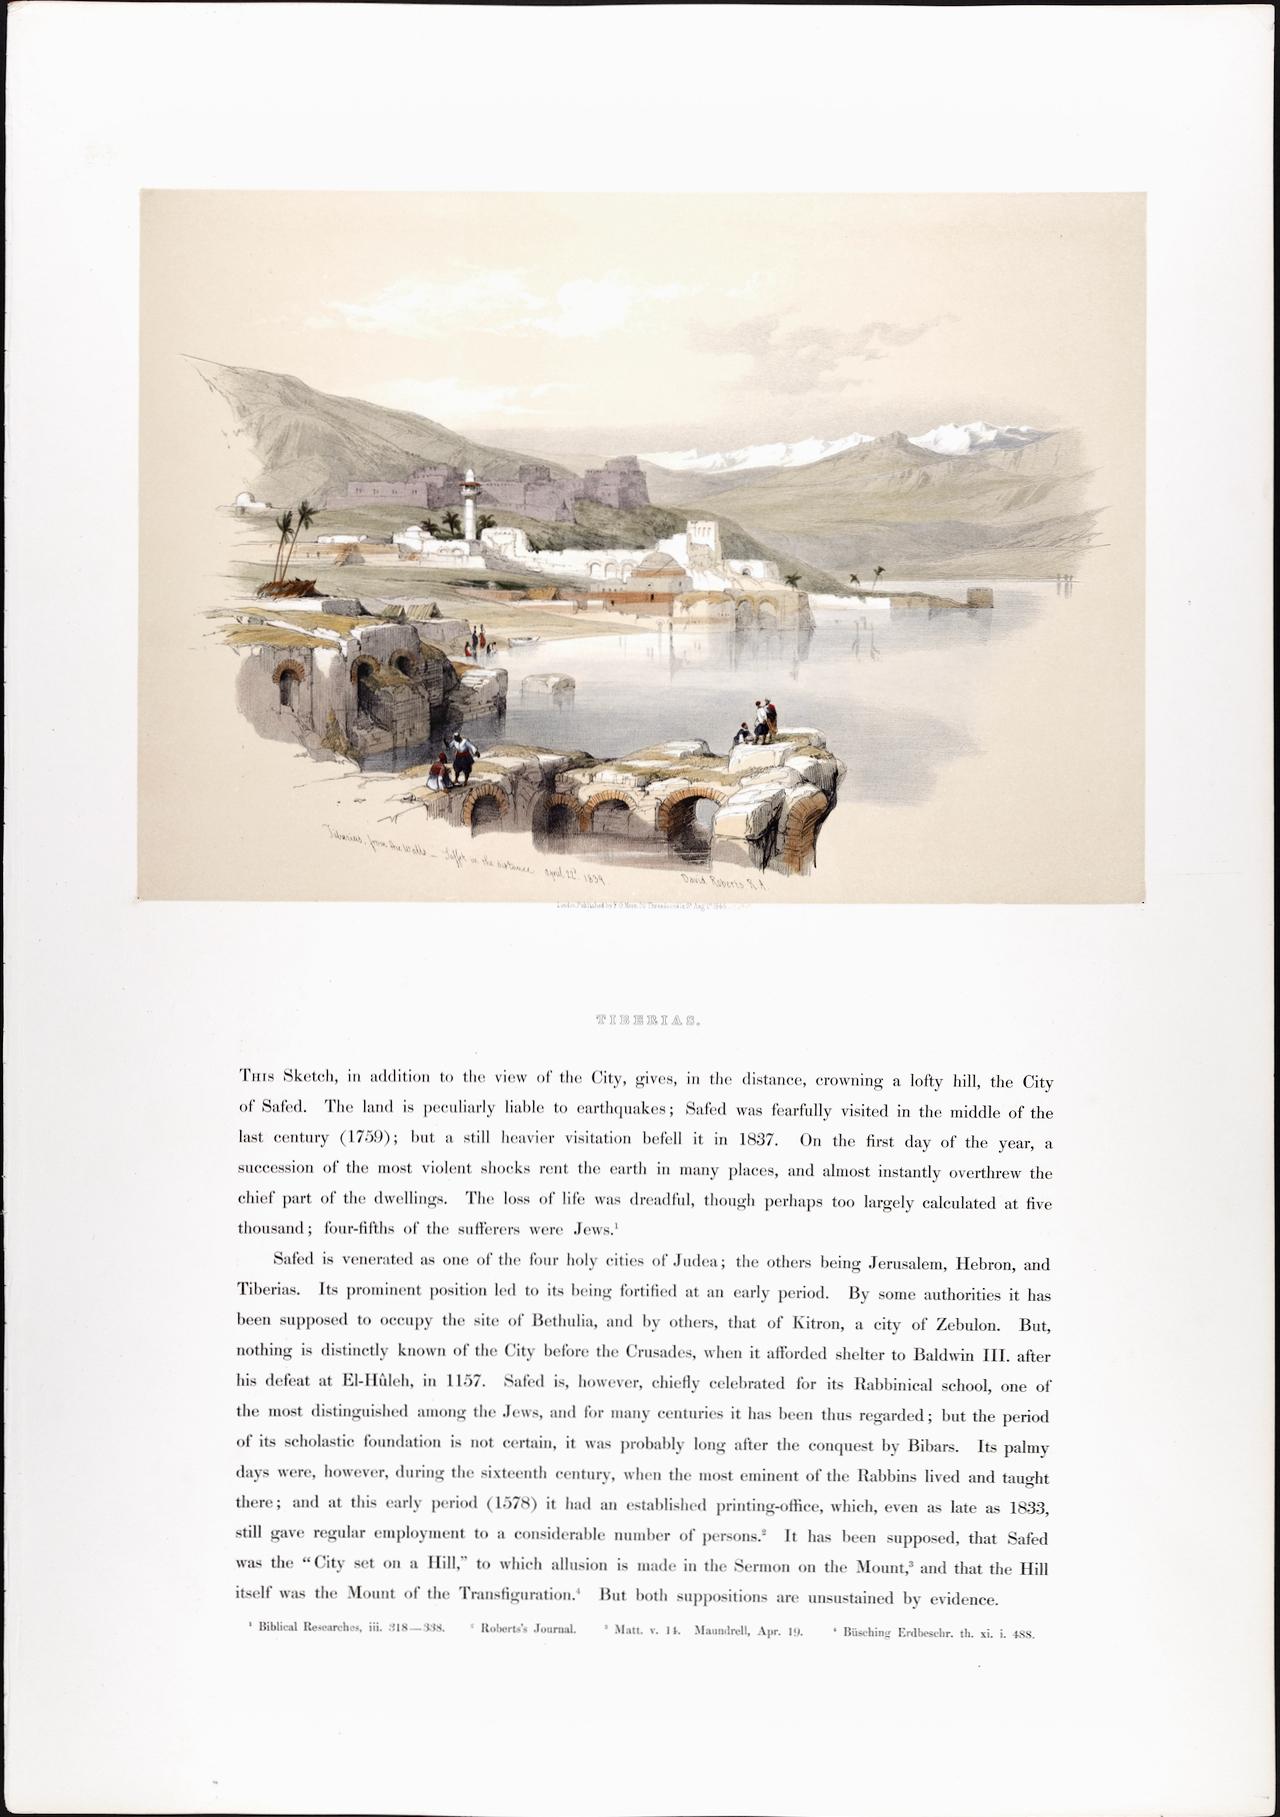 Tiberias from the Walls: David Roberts' handkolorierte Lithographie aus dem 19. Jahrhundert